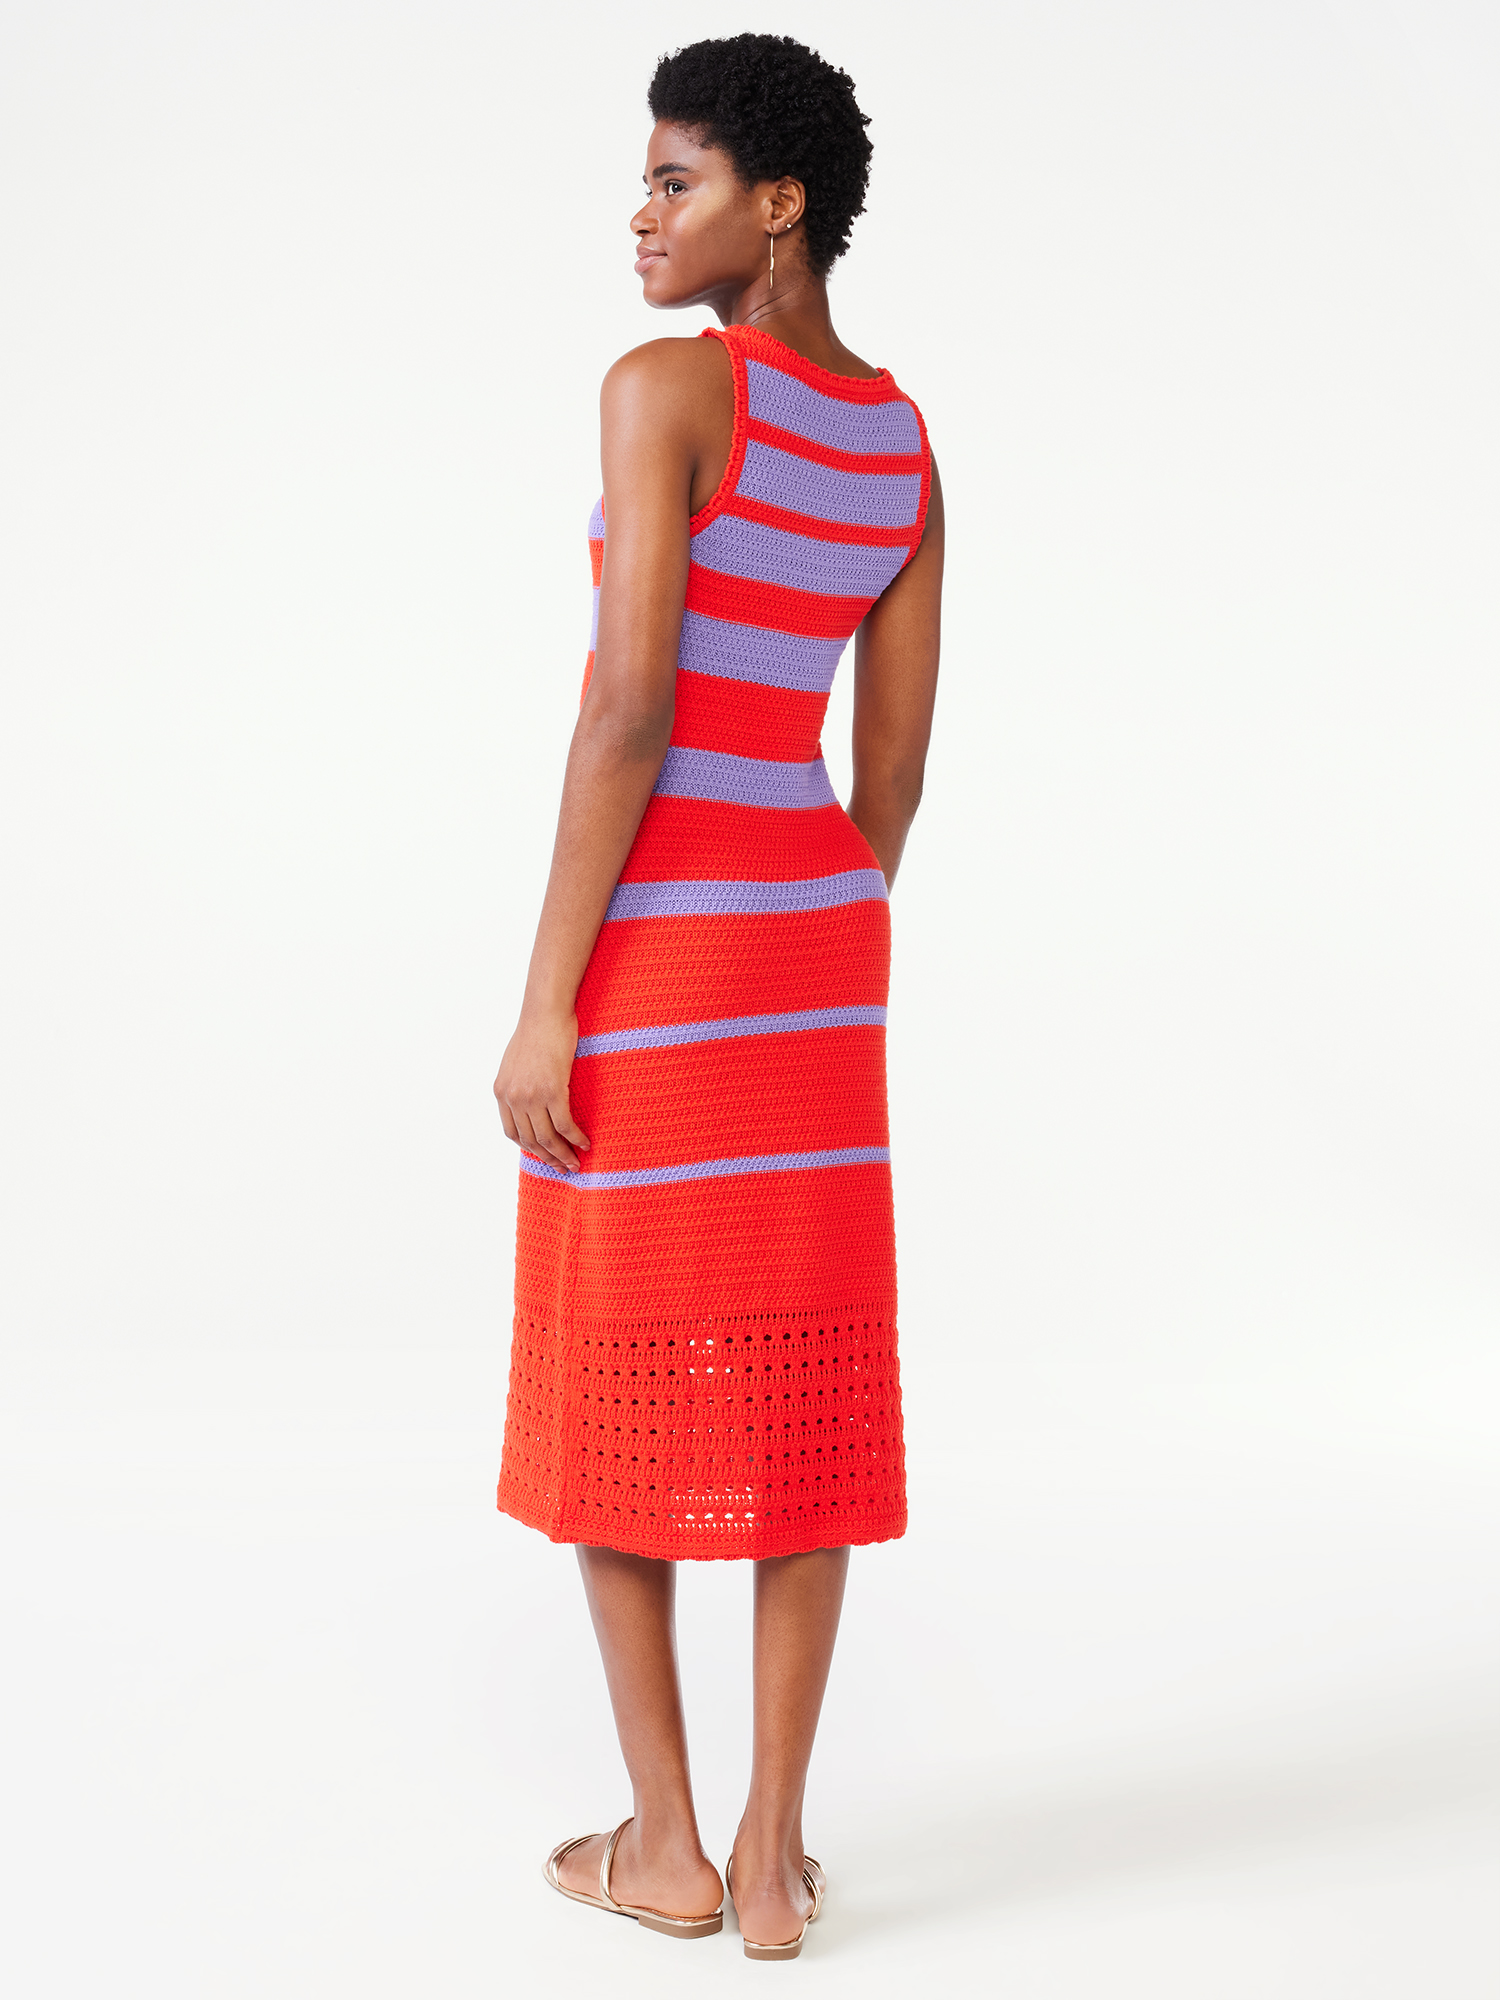 Scoop Women’s Striped Crochet Dress, Mid-Calf Length - image 4 of 4